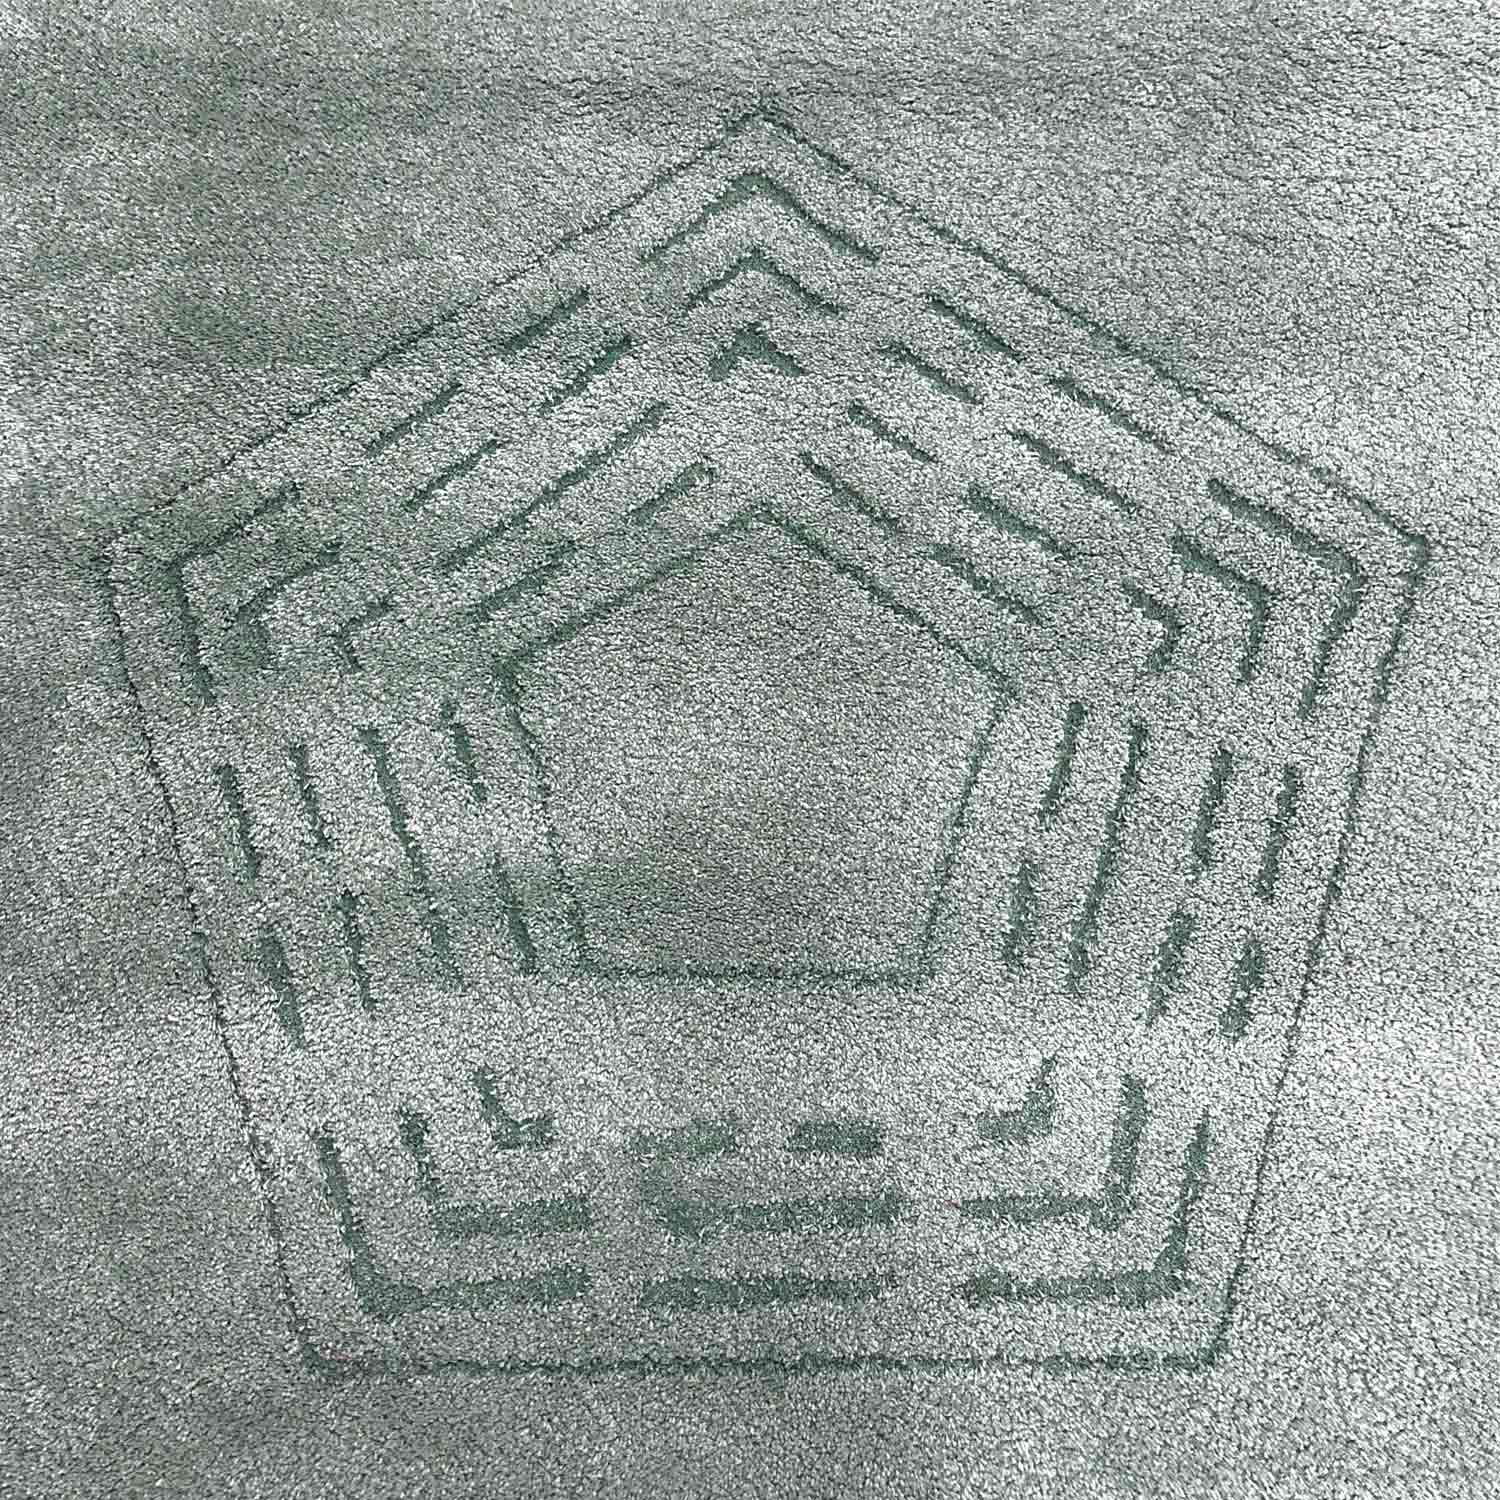 Pentagon Carpet 2019 TAPESTRY